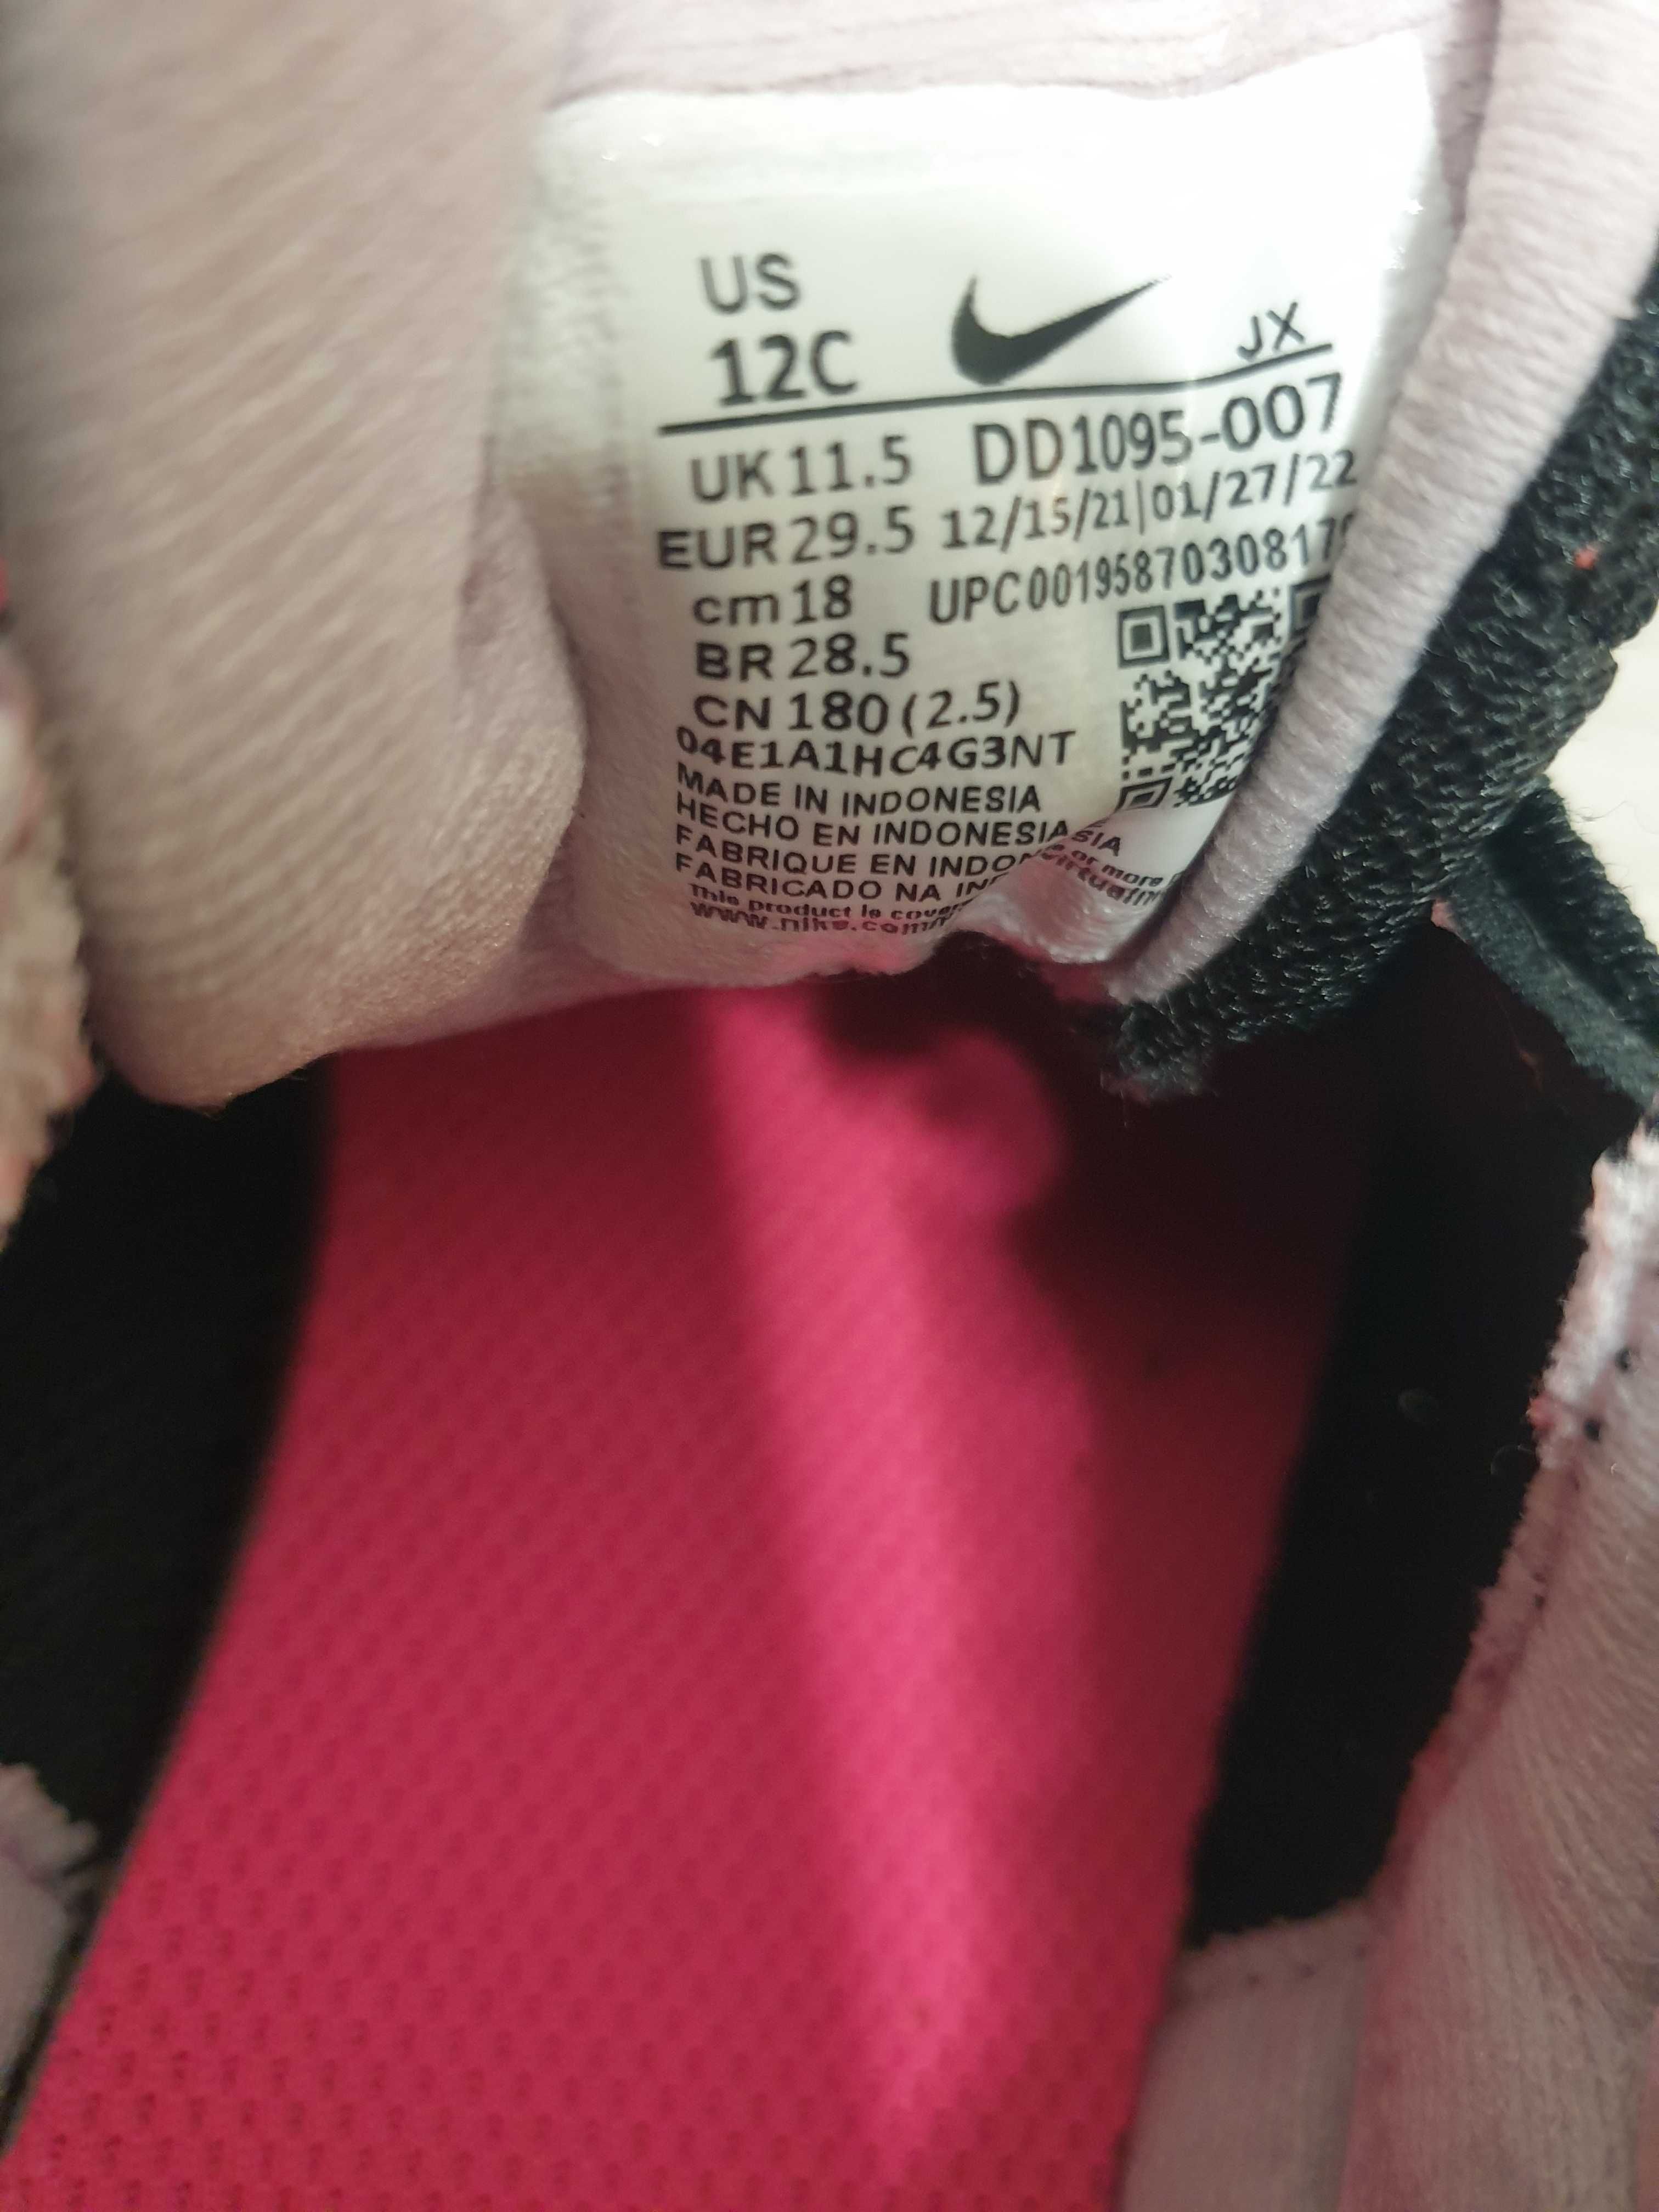 Adidasi Nike fete nr 29,5 /18 cm